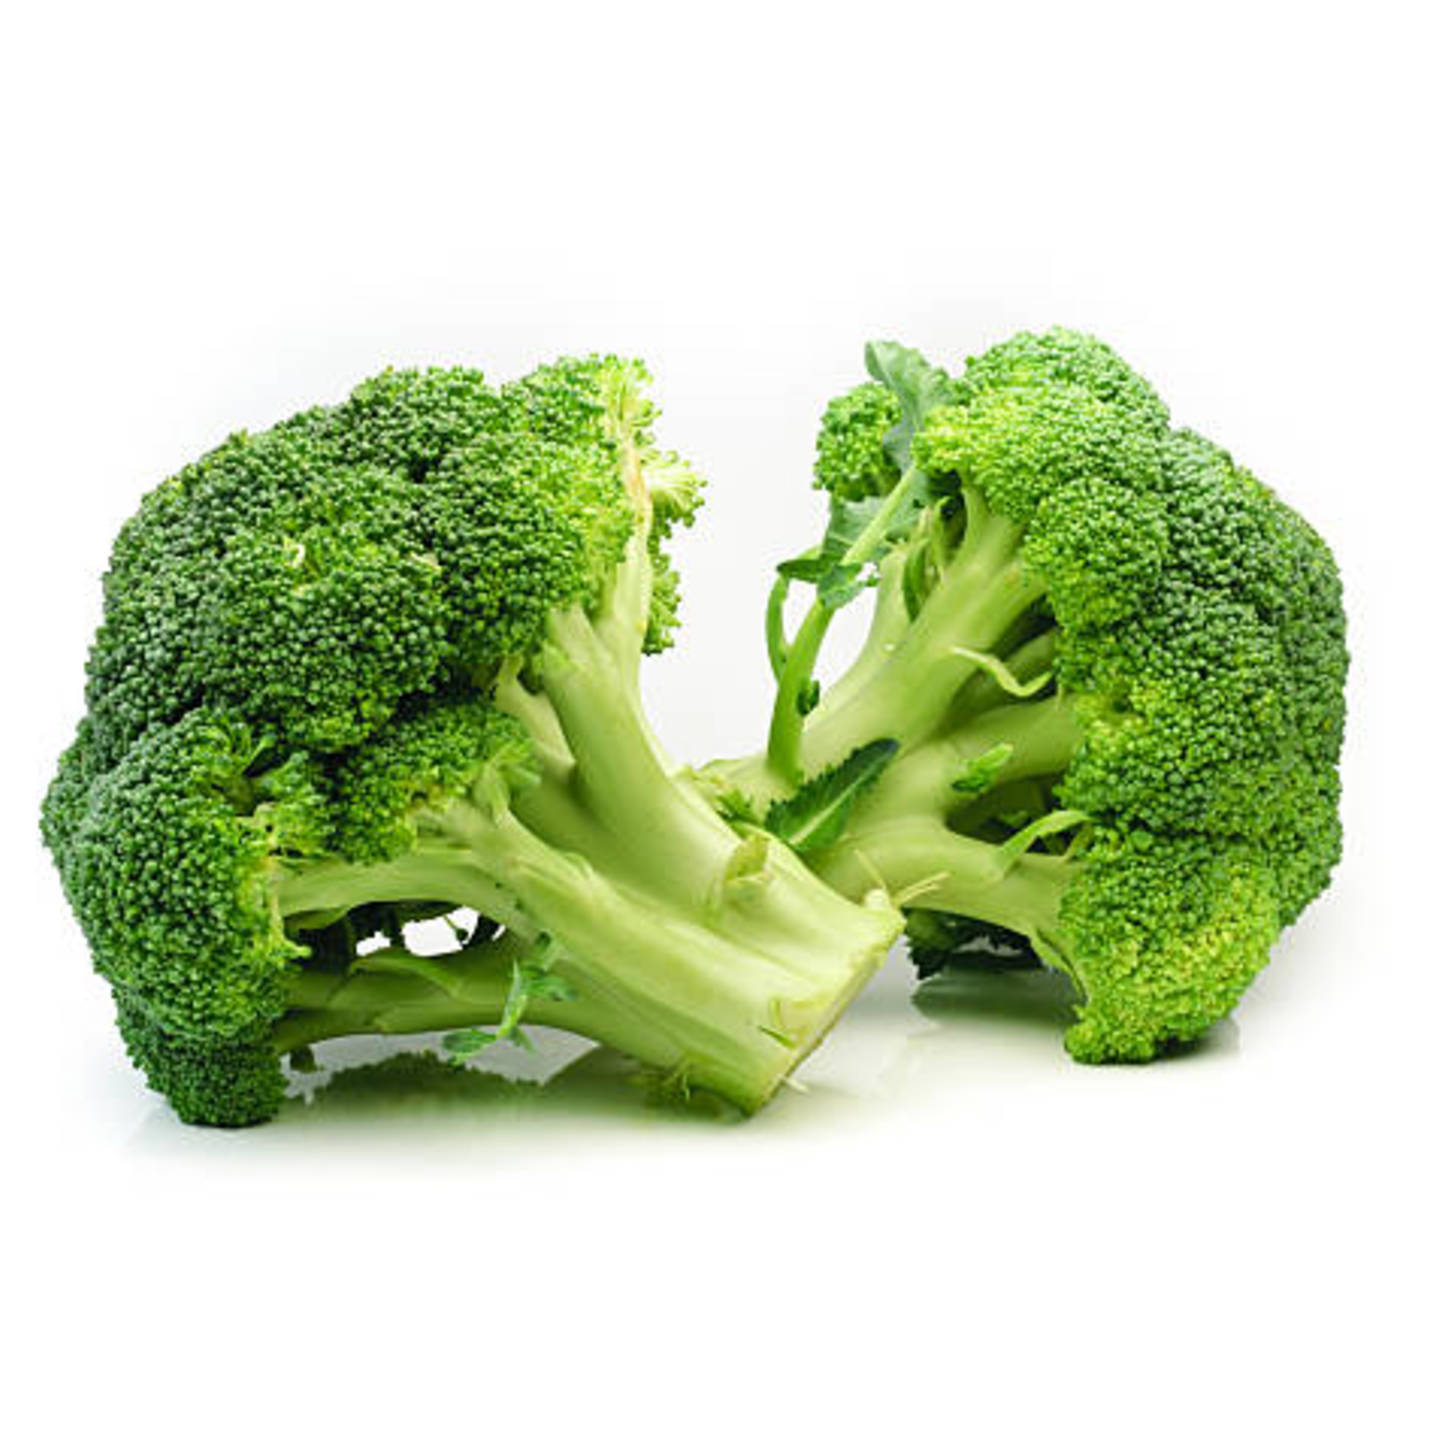 Broccoli - 1 pack